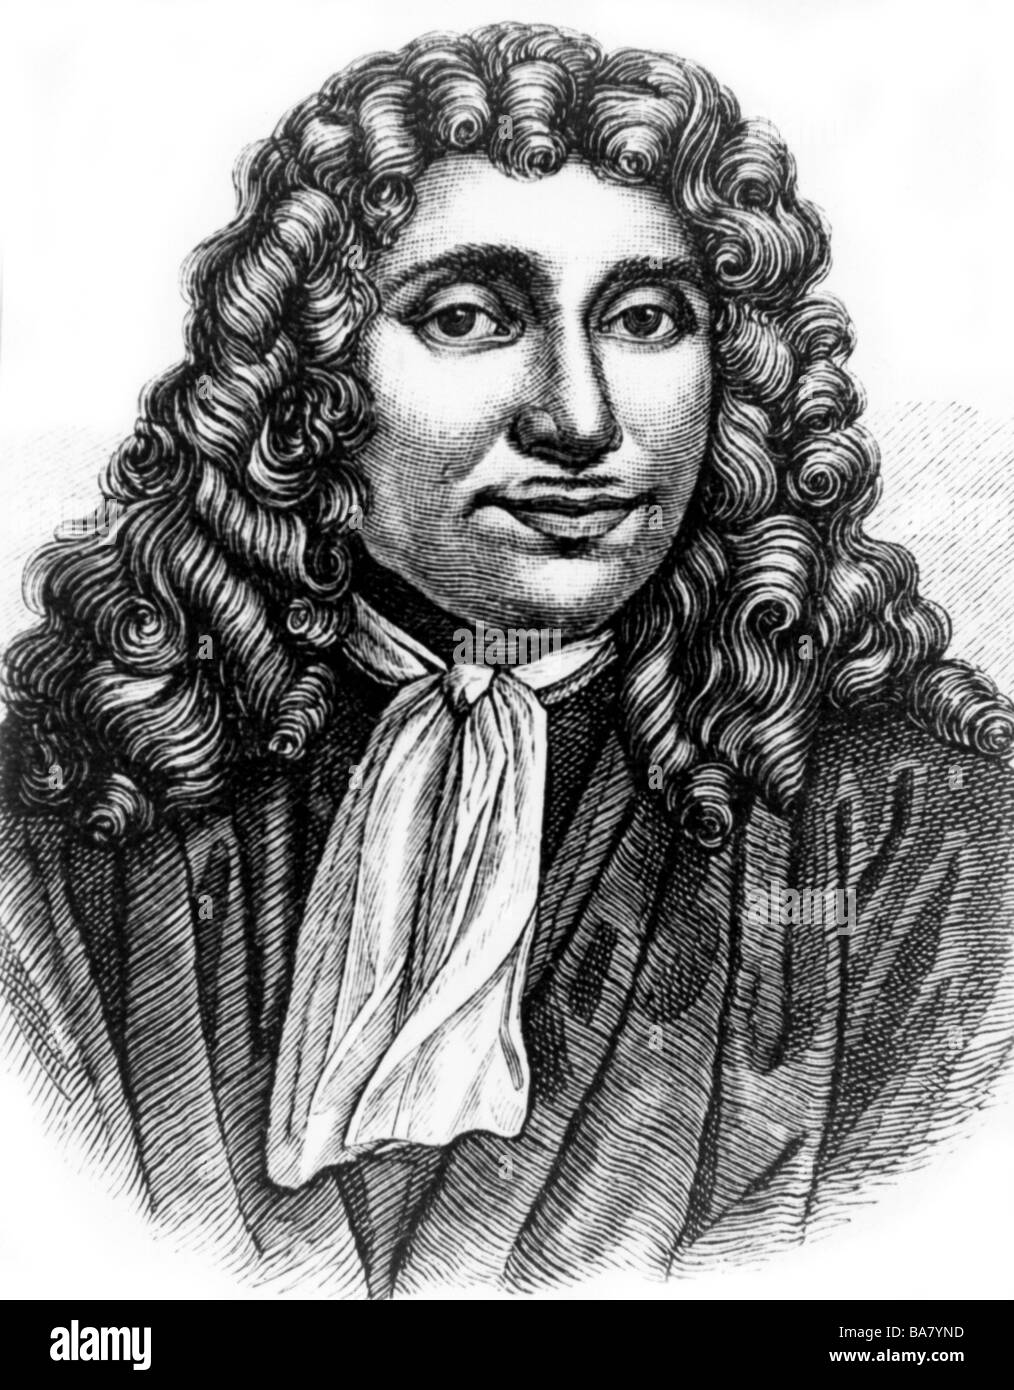 Leeuwenhoek, Antonie van, 24.10.1632 - 27.8.1723, Dutch scientist, portrait, wood engraving, 19th century, after painting by Jan Verkolje, 17th century, Artist's Copyright has not to be cleared Stock Photo